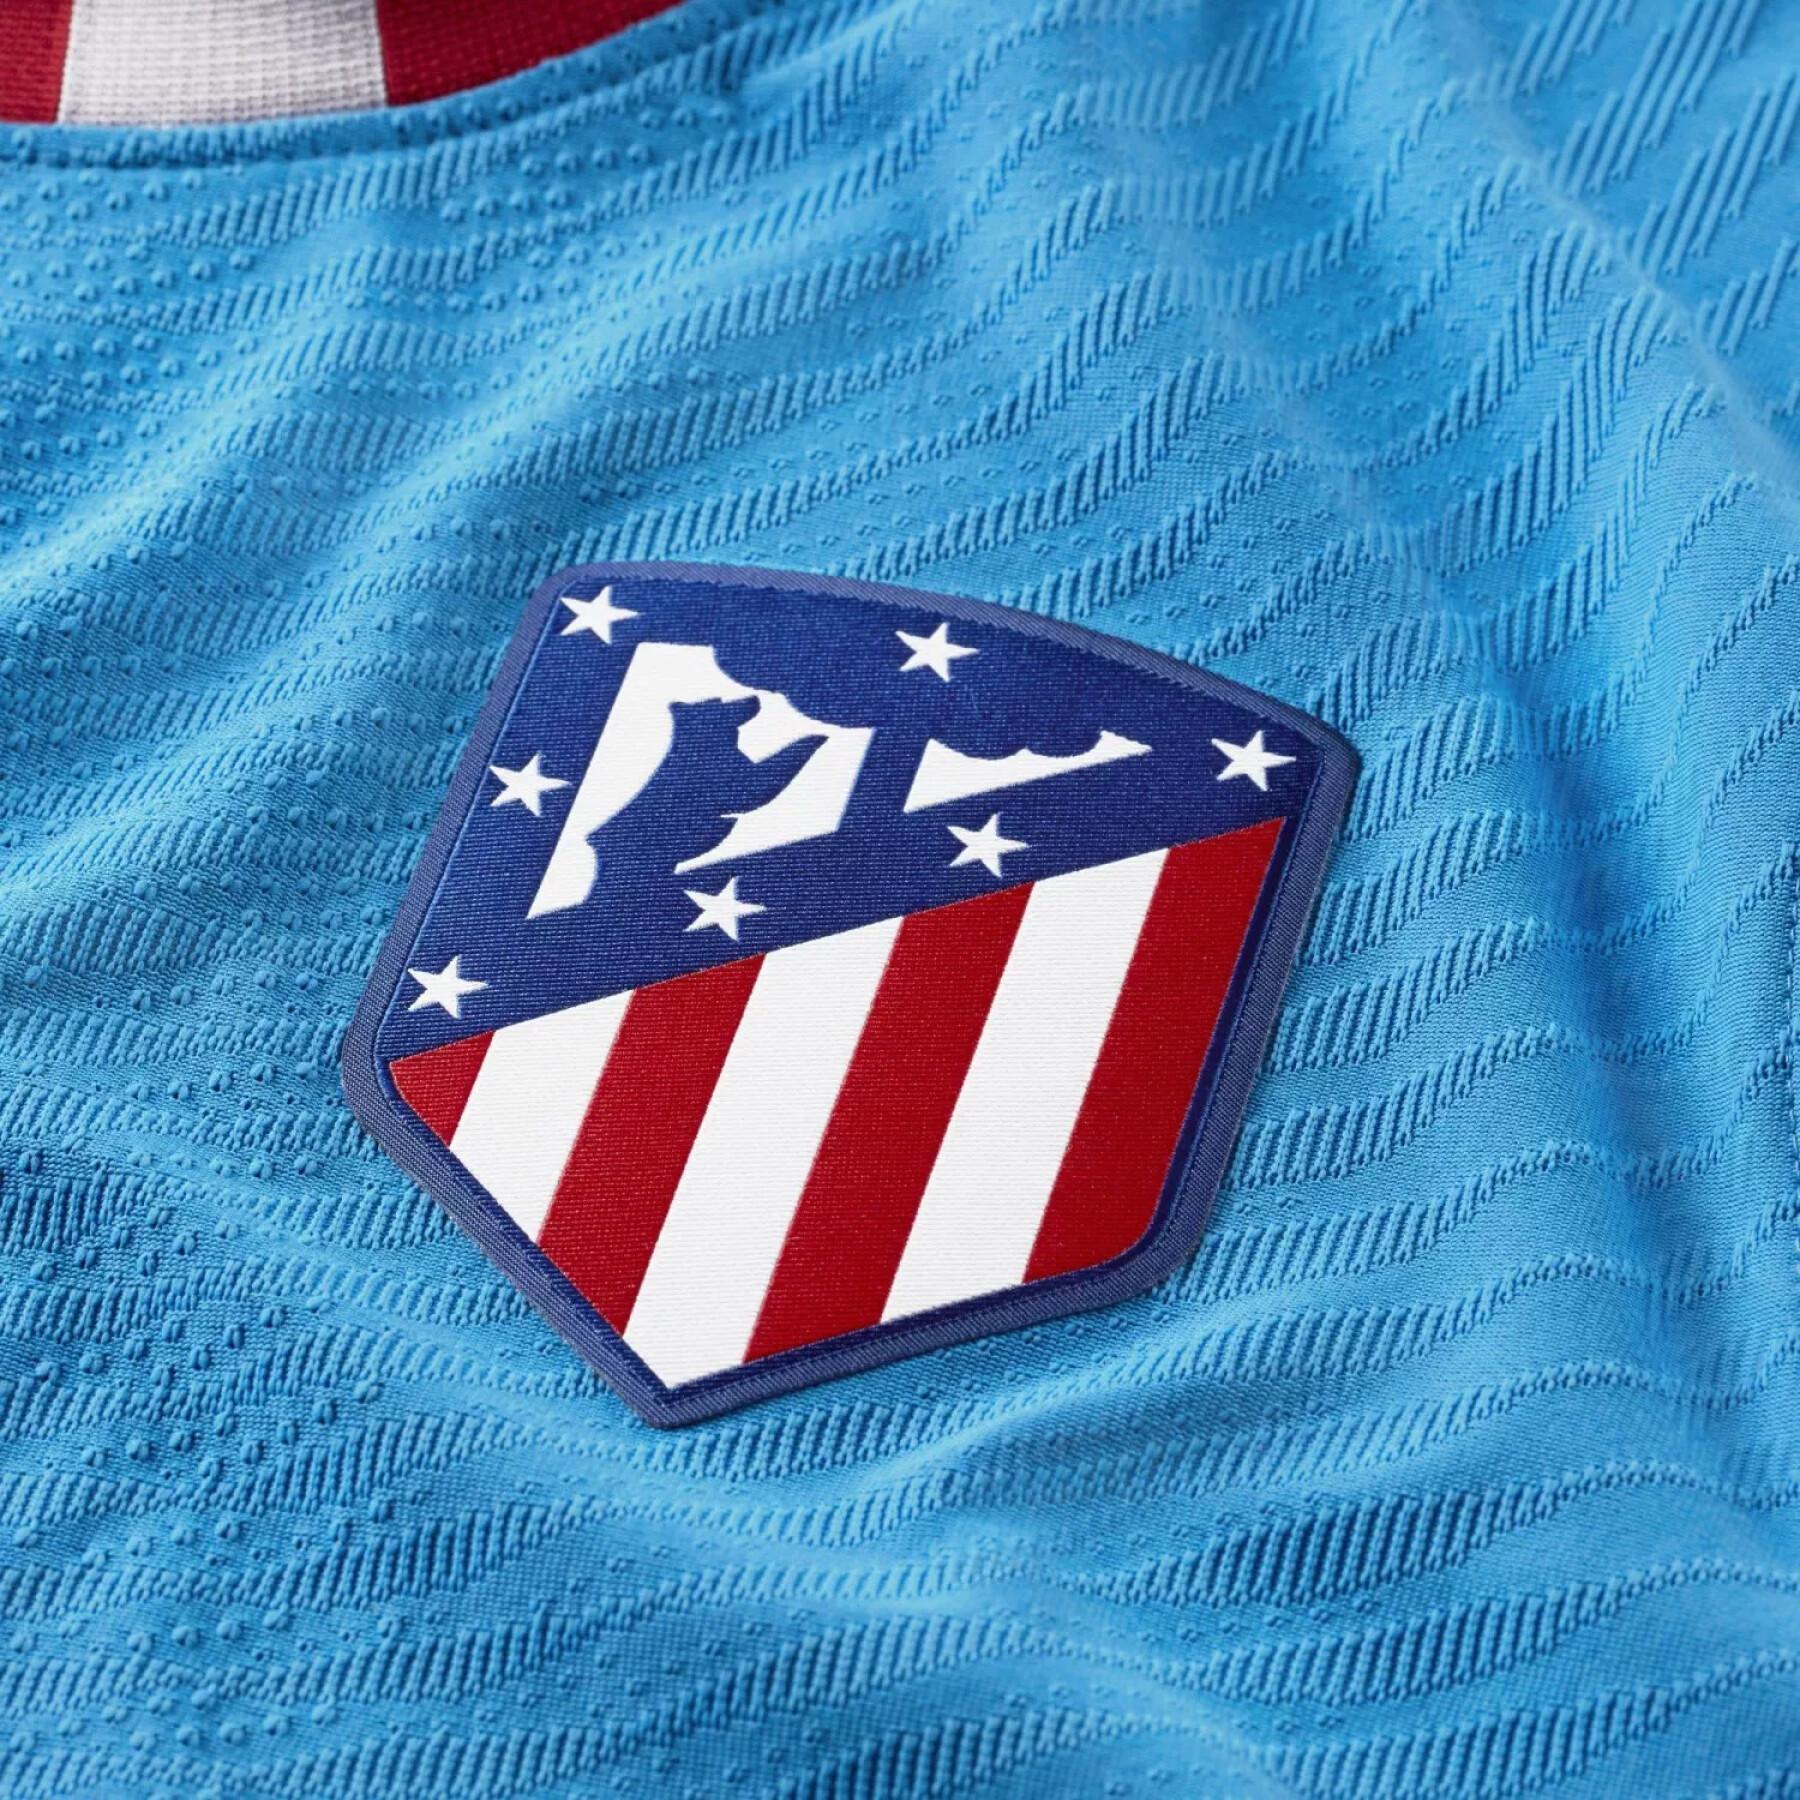 Autentisk tredje tröja Atlético Madrid 2021/22